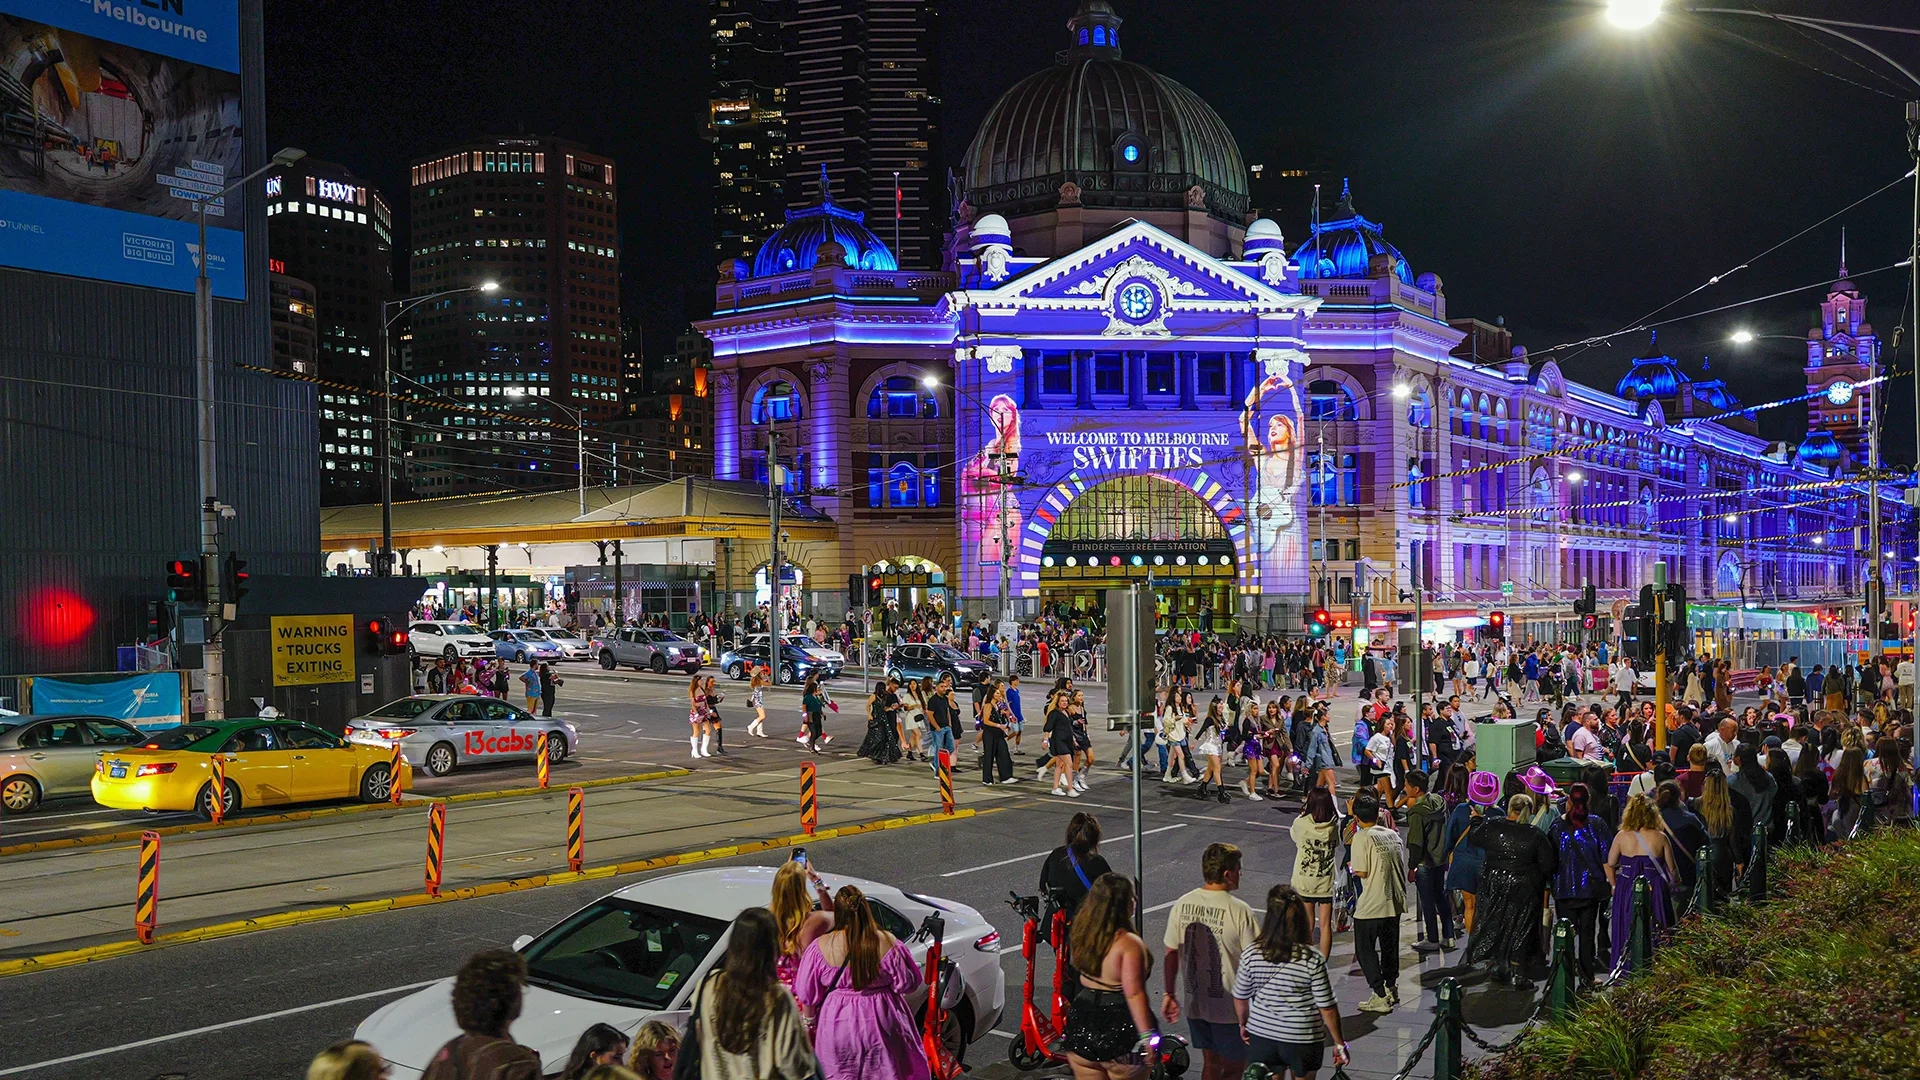 Fans queue outside large concert venue in Melbourne that has the Eras concert poster projected onto the building